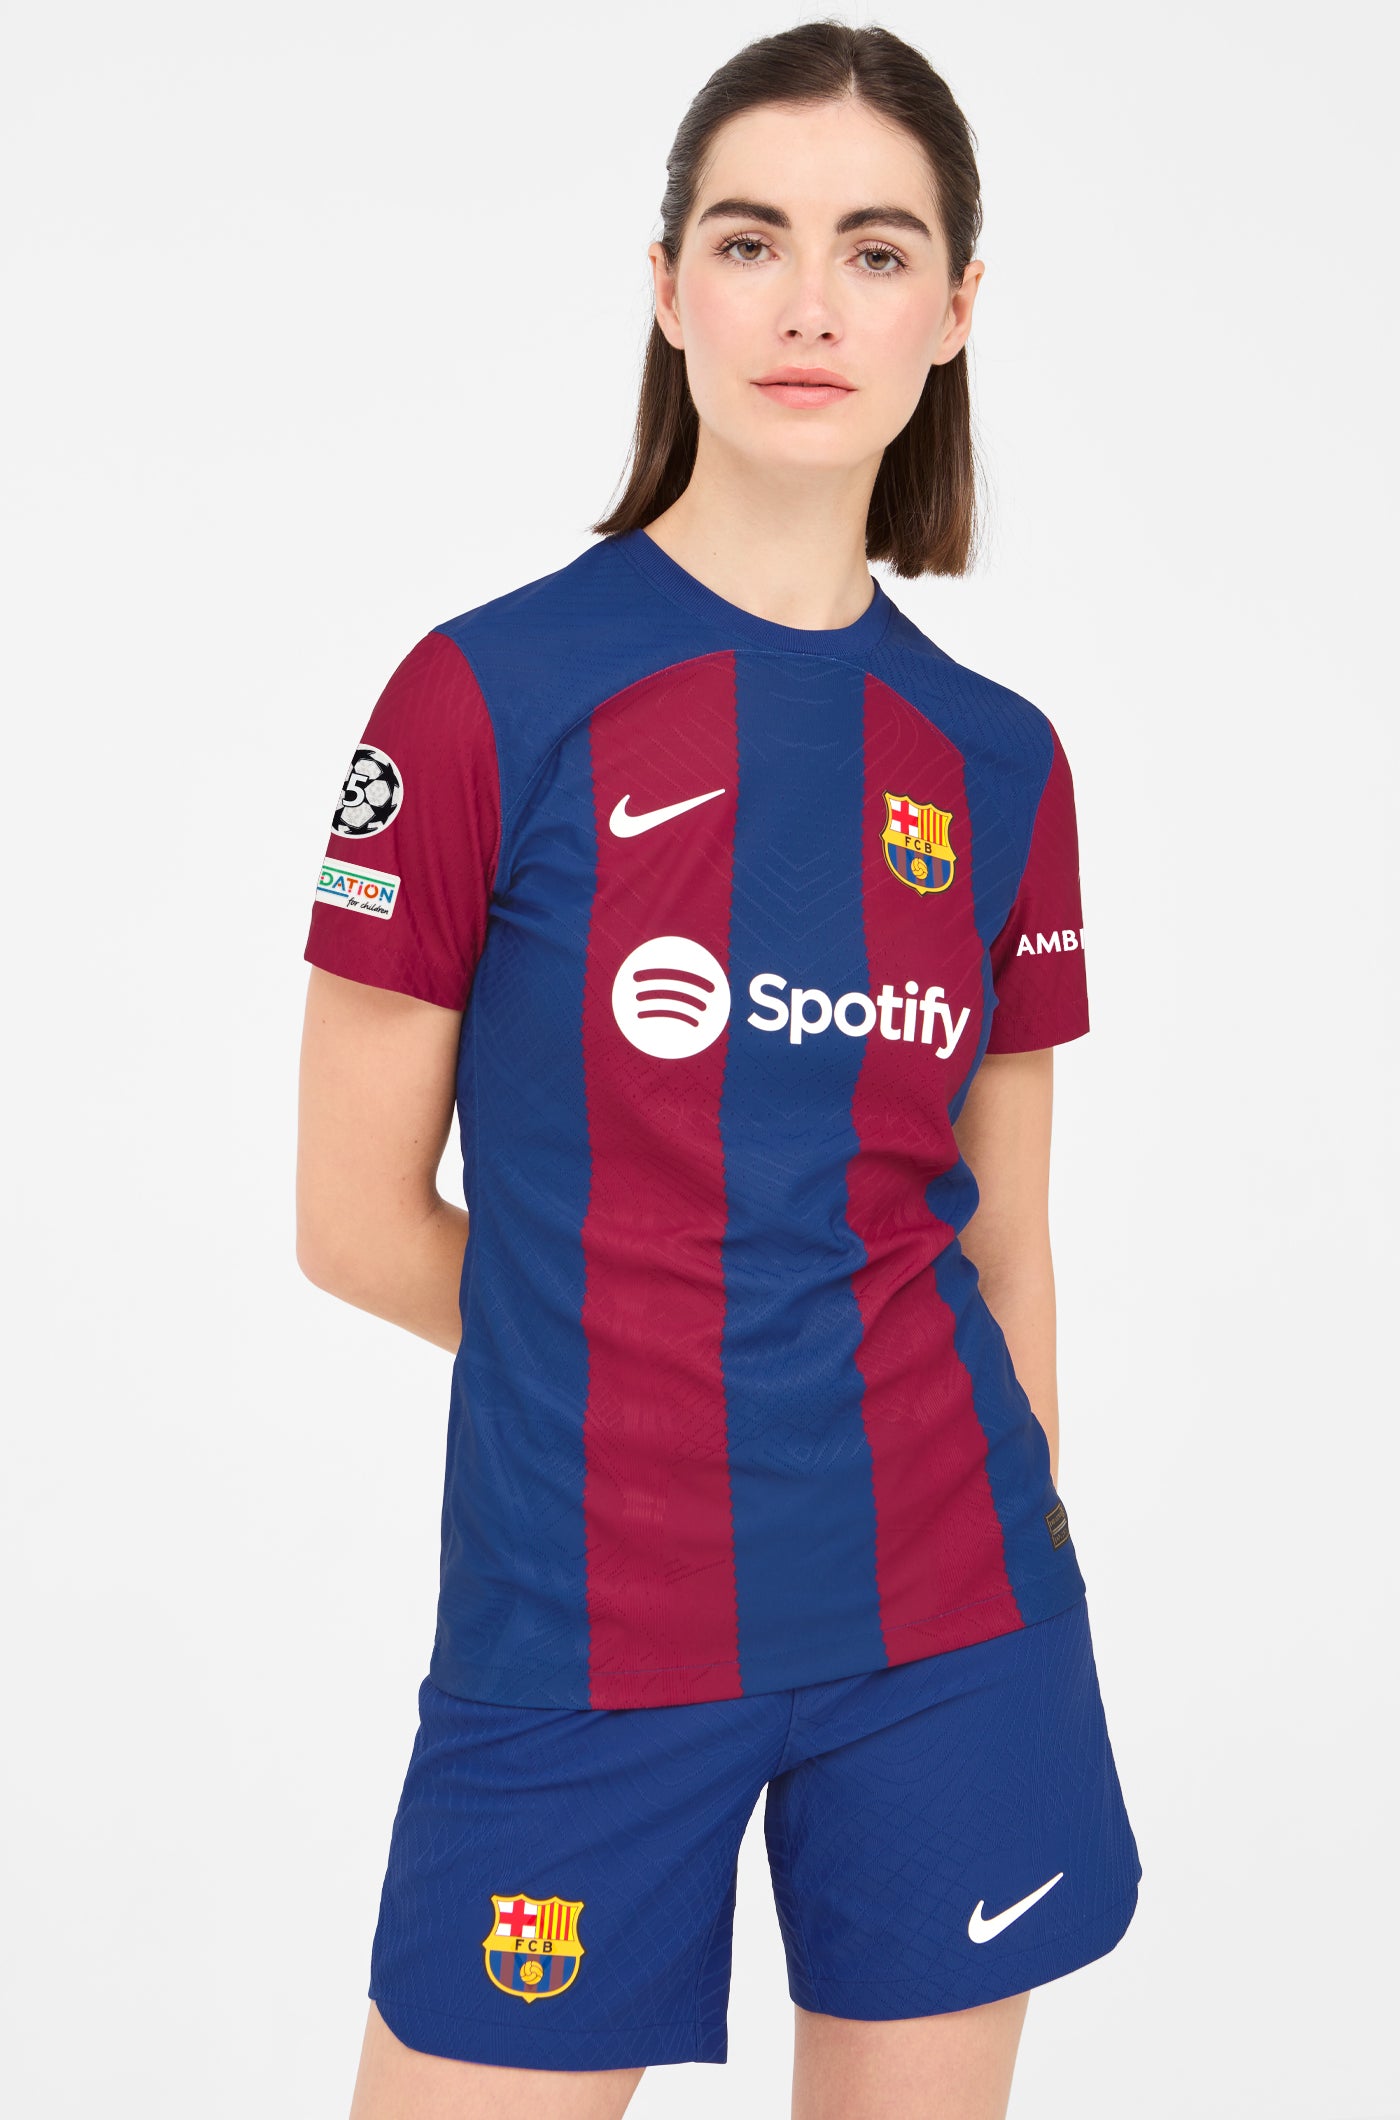 UCL FC Barcelona Home Shirt 23/24 Player's Edition - Women - GAVI